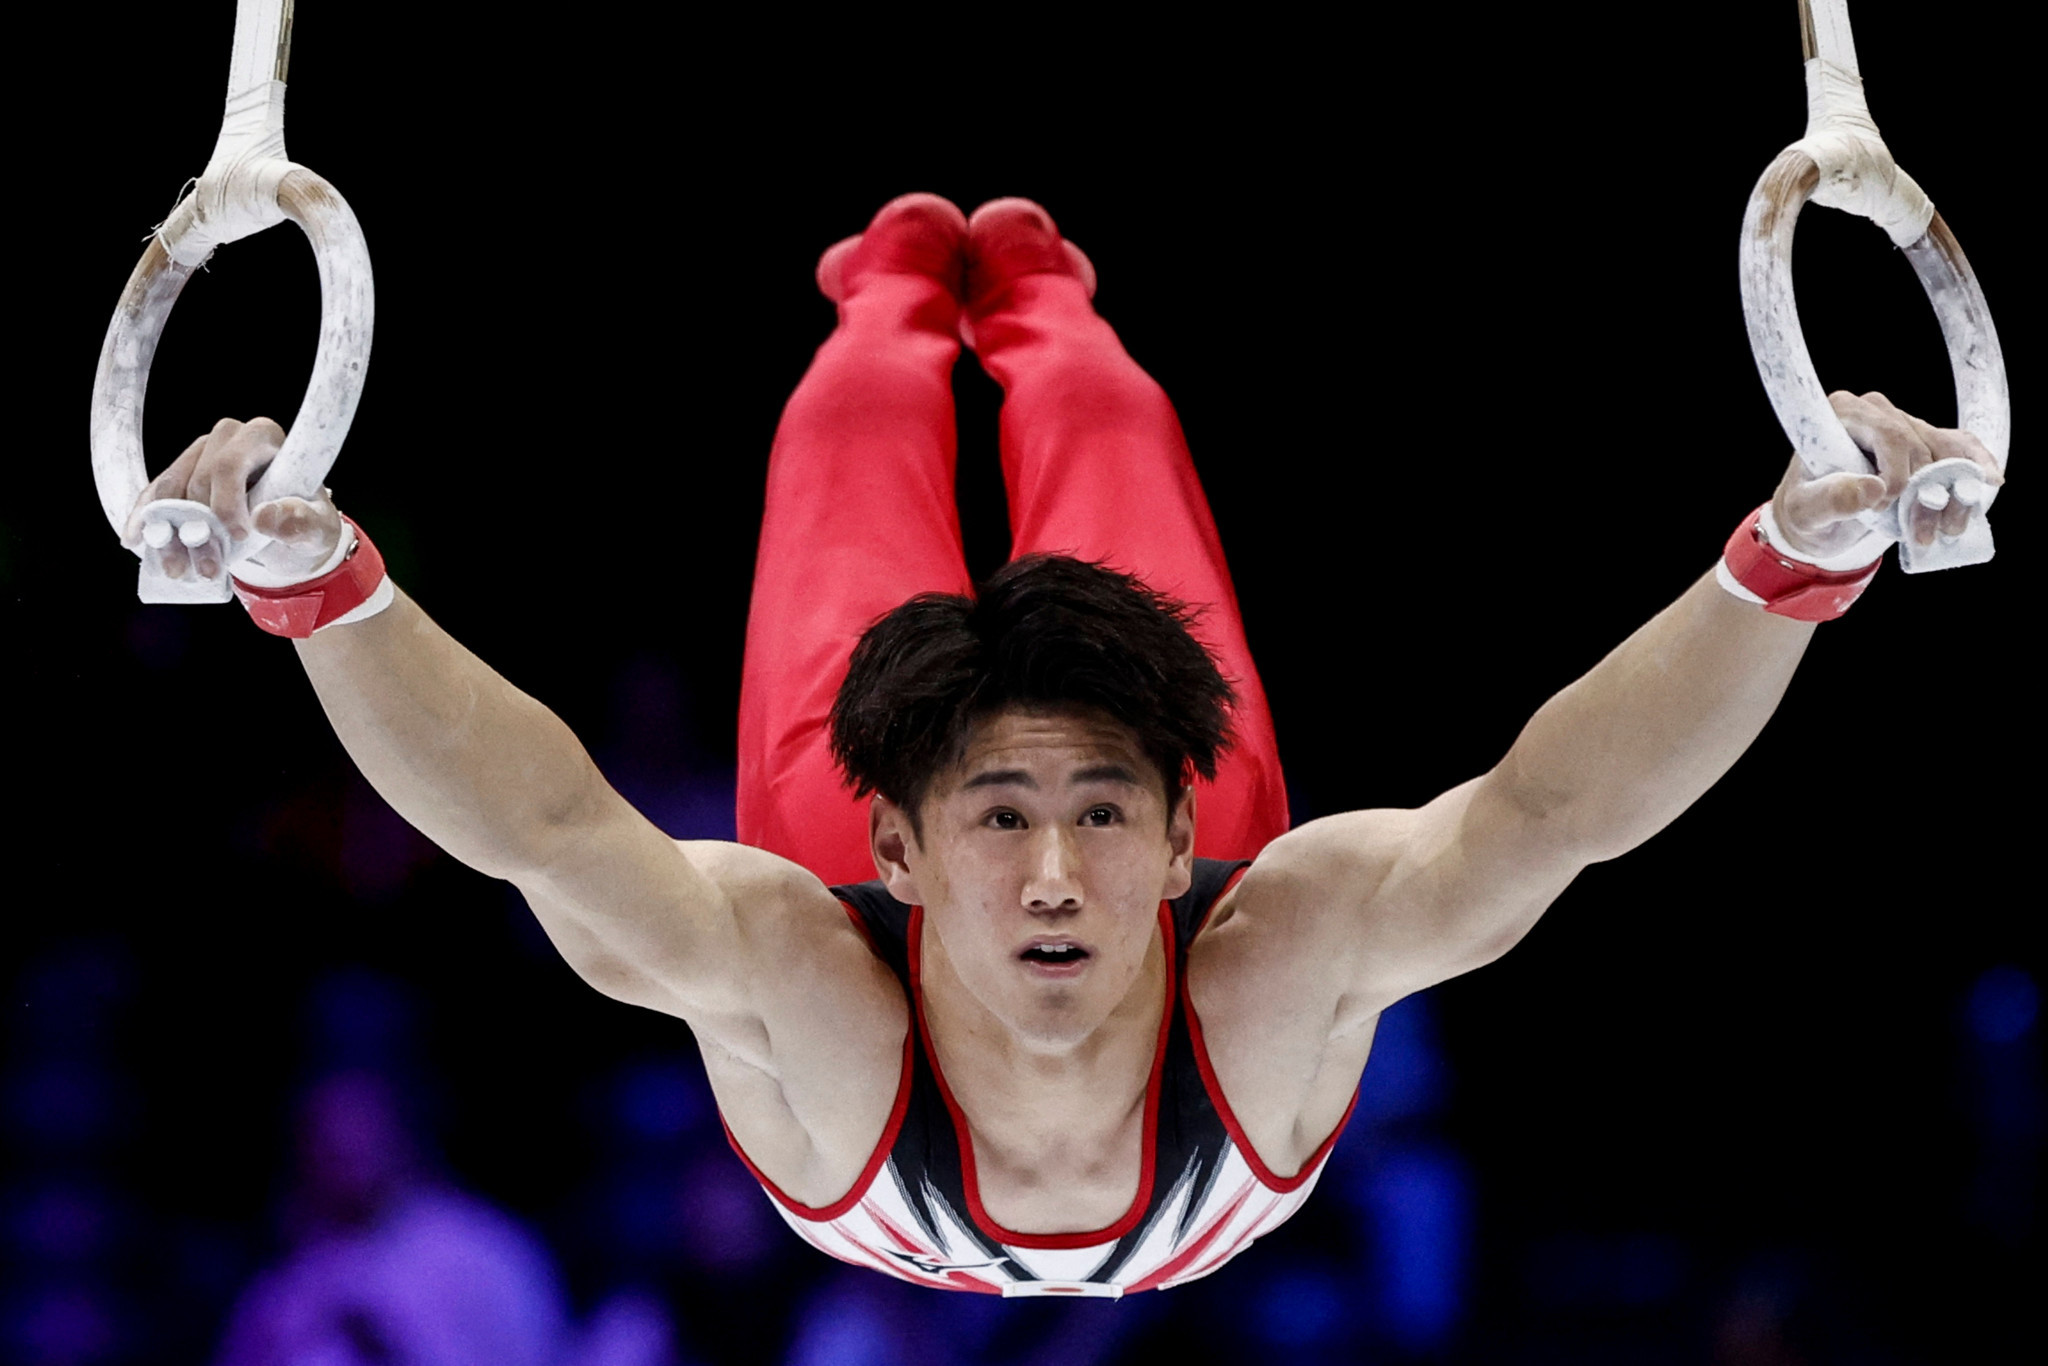 Hashimoto chosen for all-around Artistic Gymnastics World Championships final despite ranking third among Japan's athletes